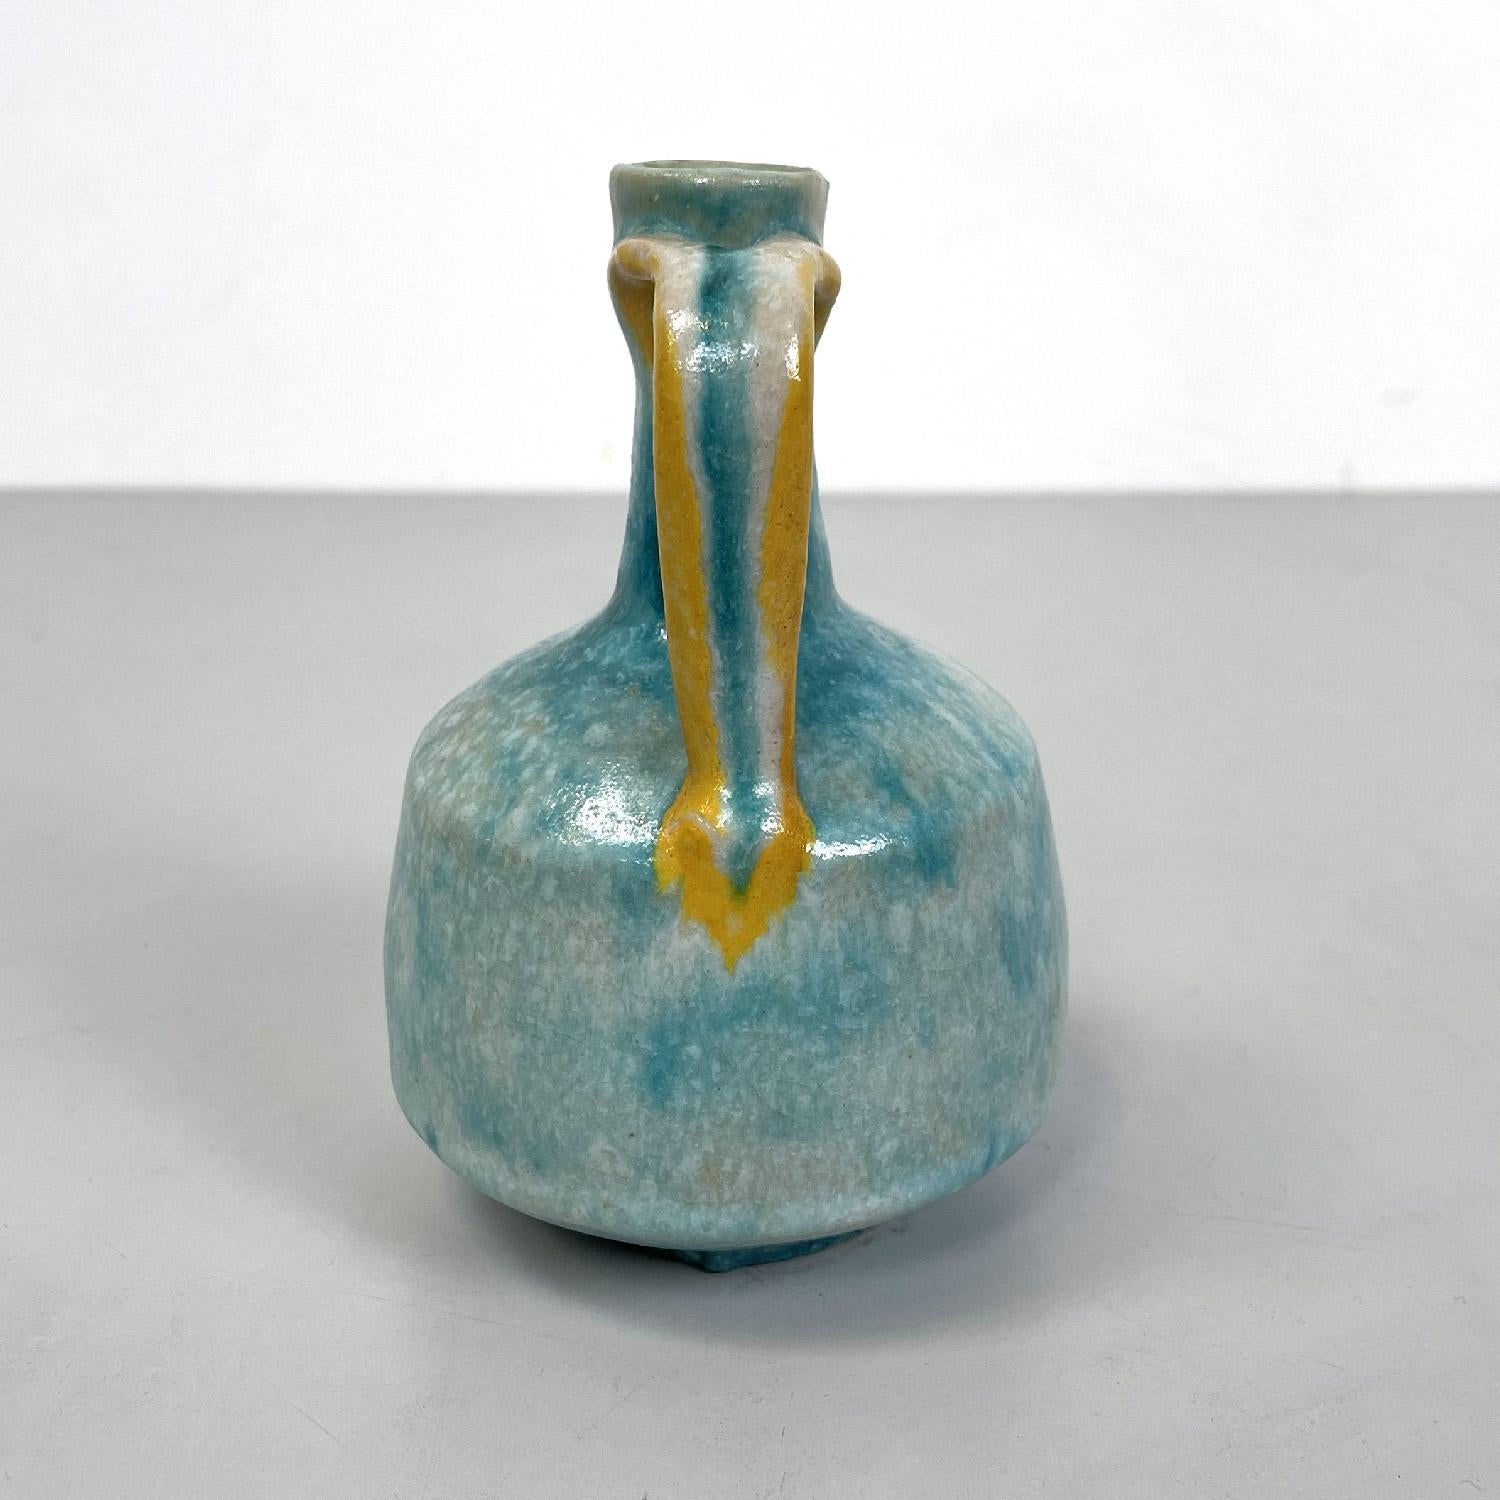 Ceramic Italian modern light blue and yellow ceramic vase by Bruno Gambone, 1970s For Sale